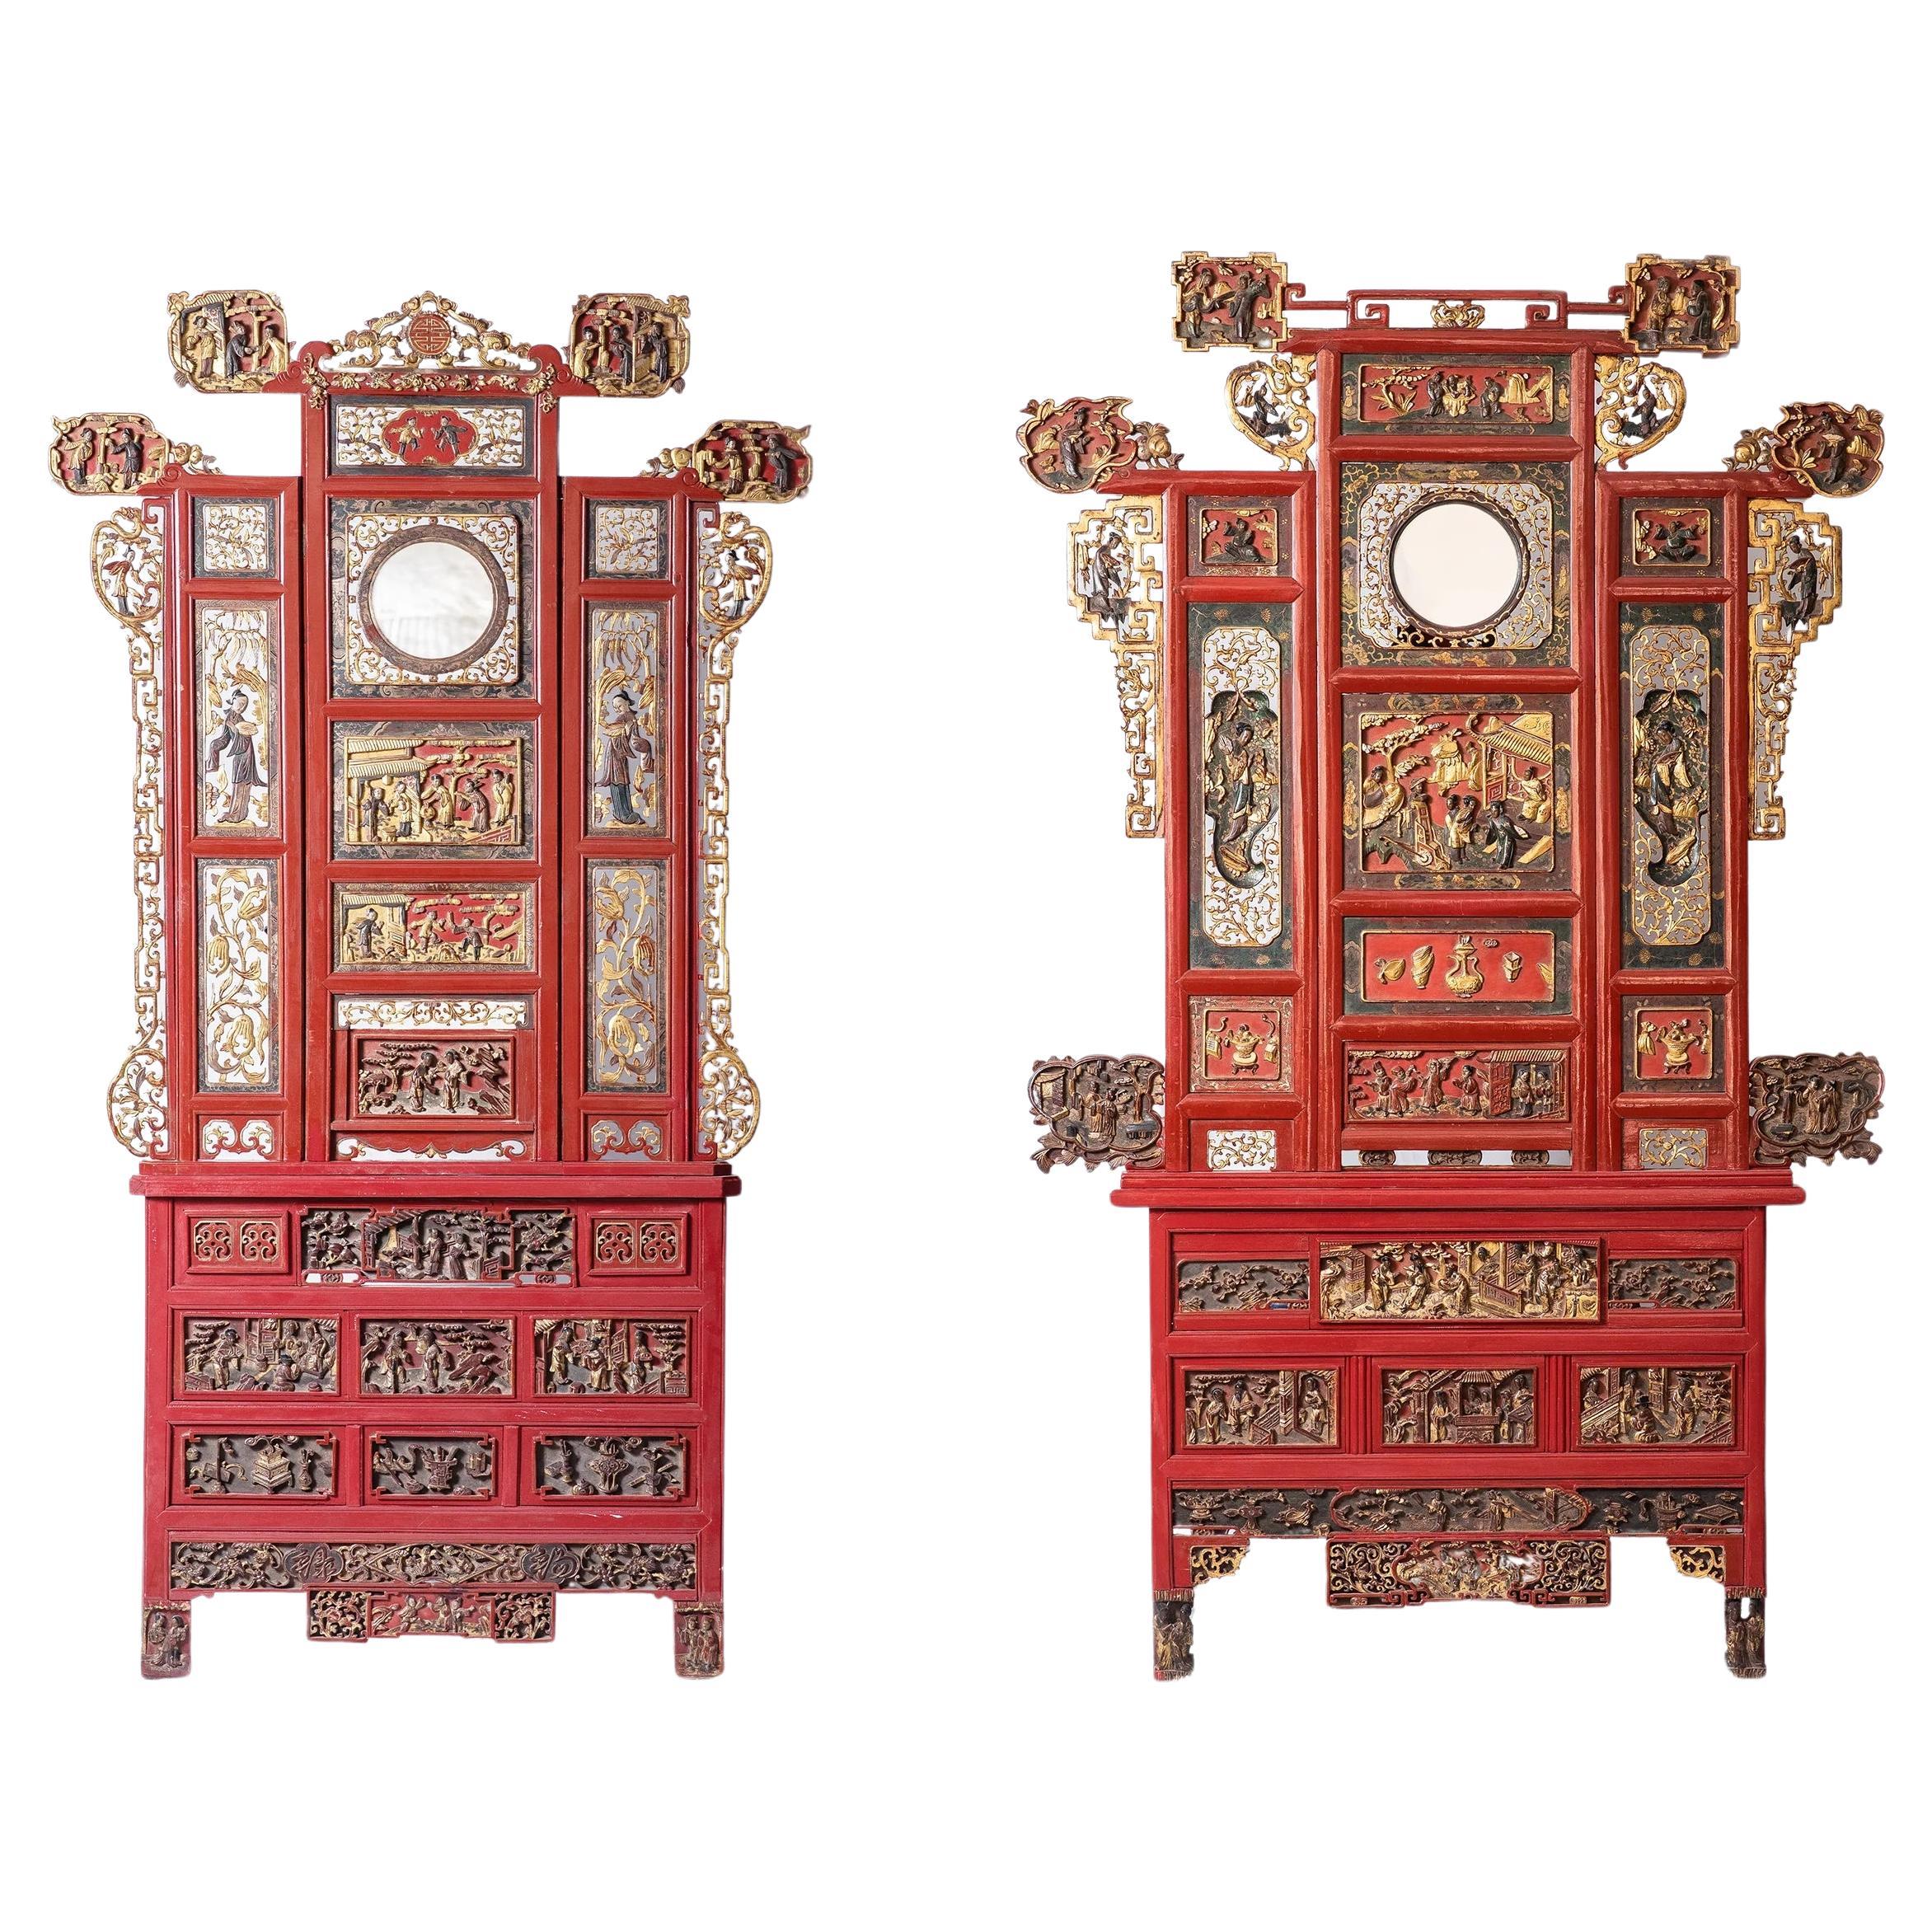 Two Chinese panels, late 19th century, China, circa 1880